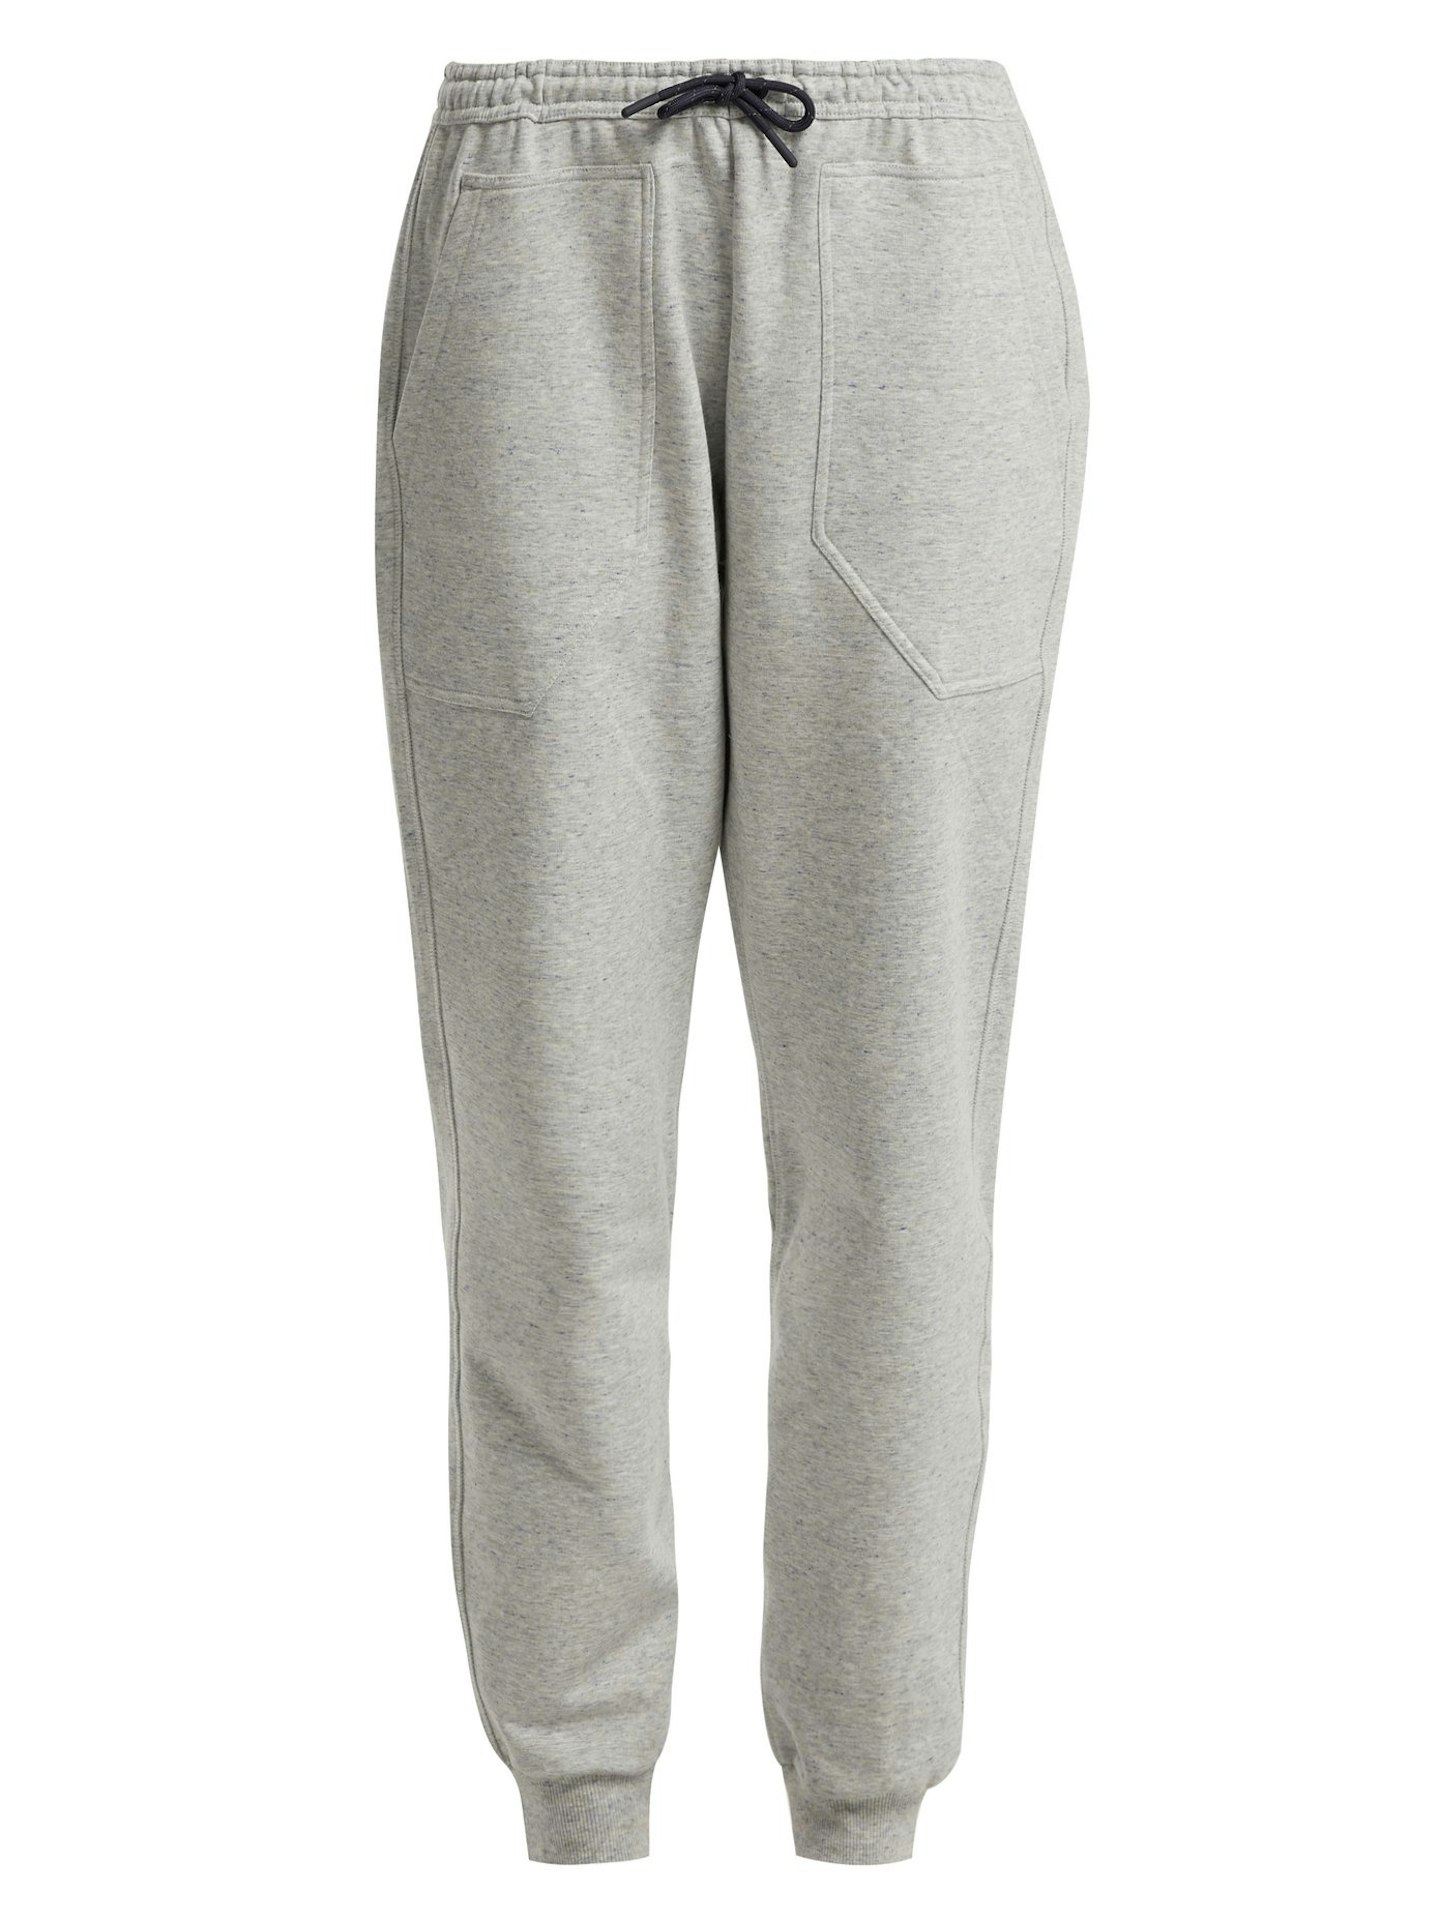 LNDR, Dander Cotton-Blend Track Pants, £135, Matchesfashion.com